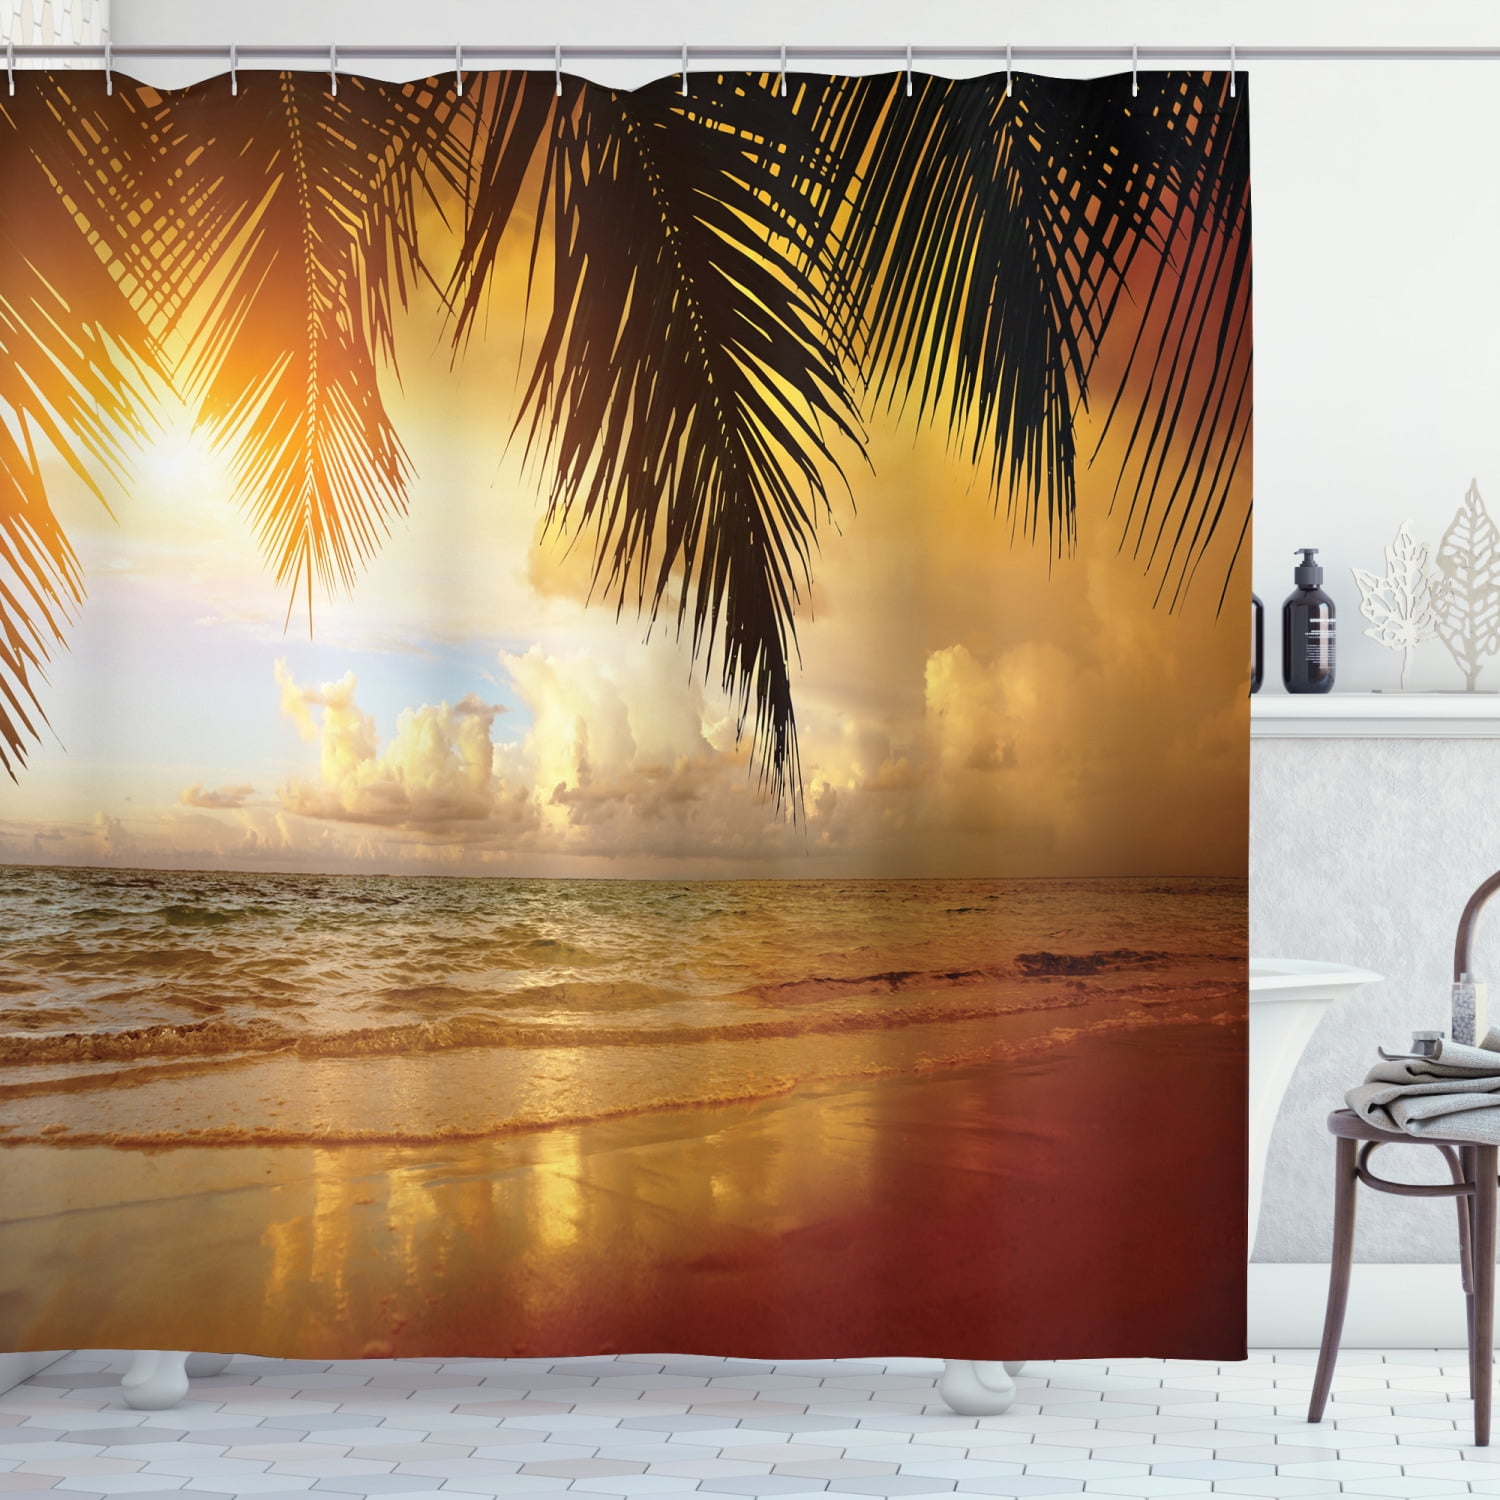 Sunset Ocean Beach Seaside Palm Trees Shower Curtain Bathroom Waterproof Fabric 